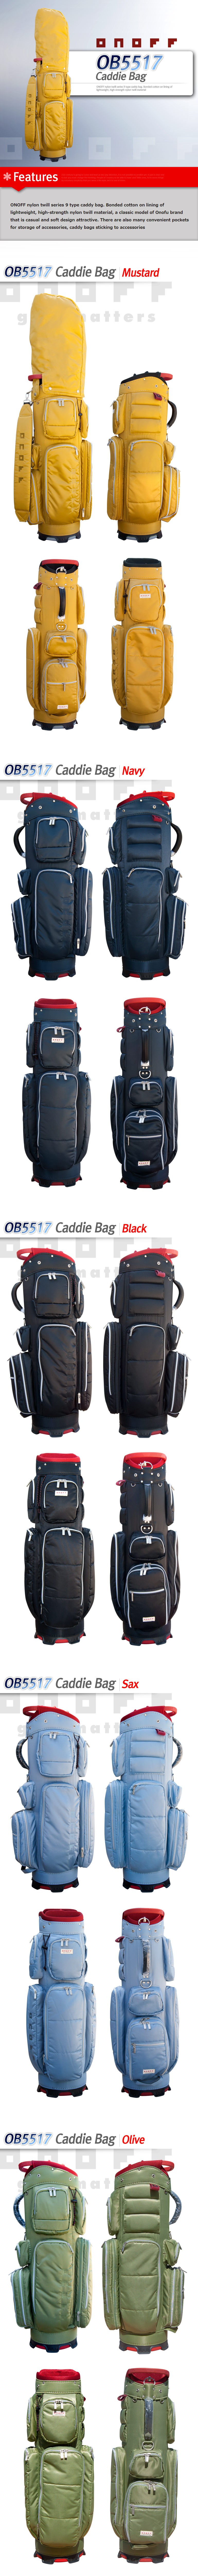 OB5517 Caddie Bag